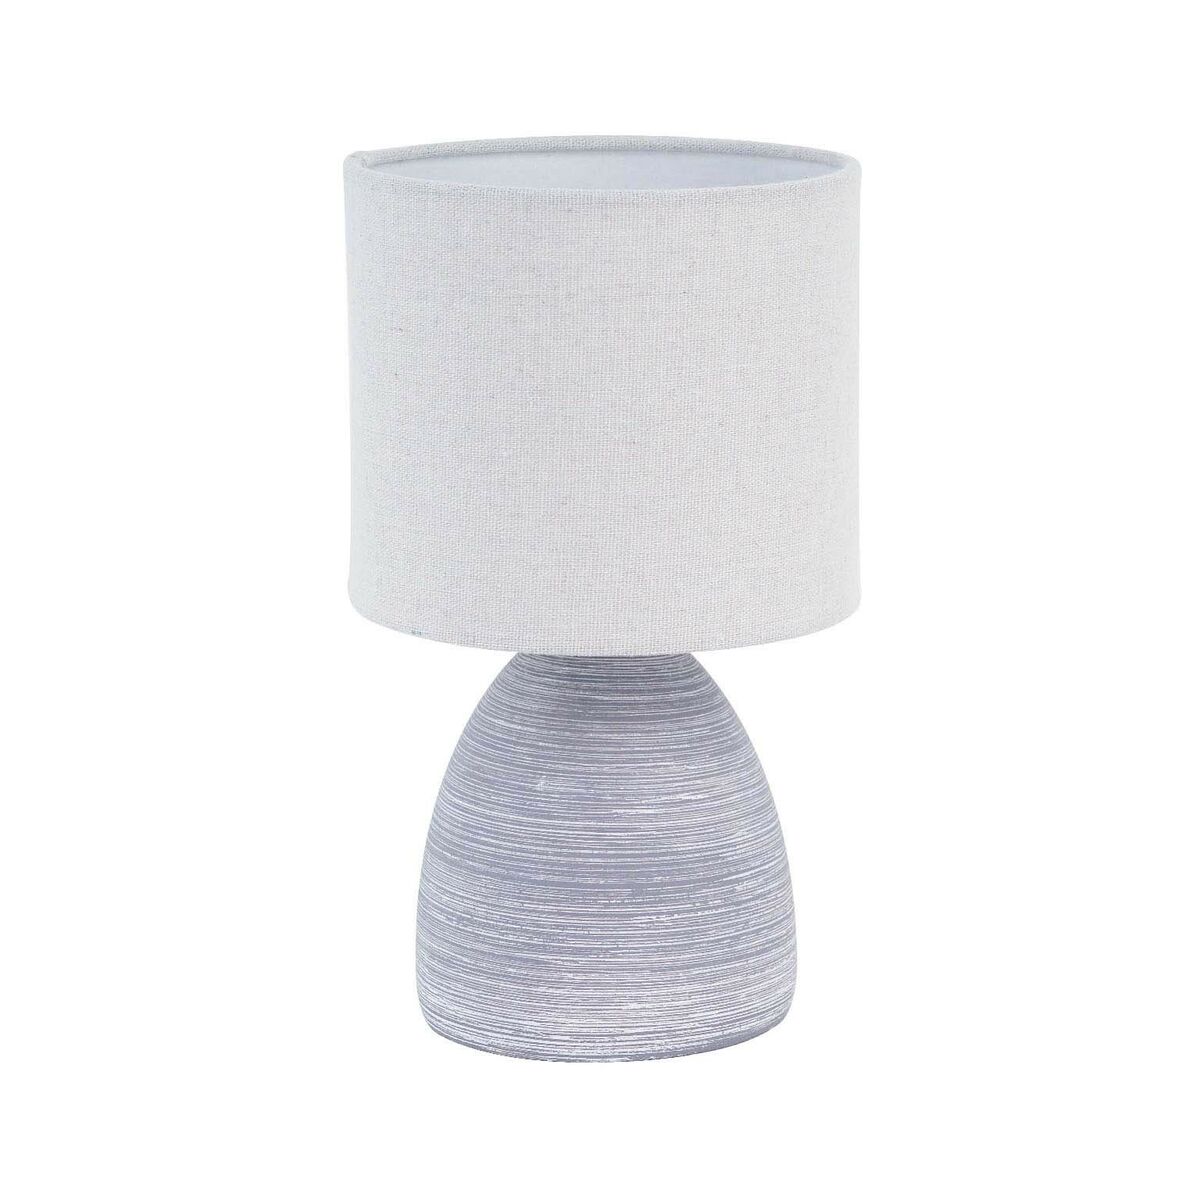 Table lamp Versa light grey ceramic